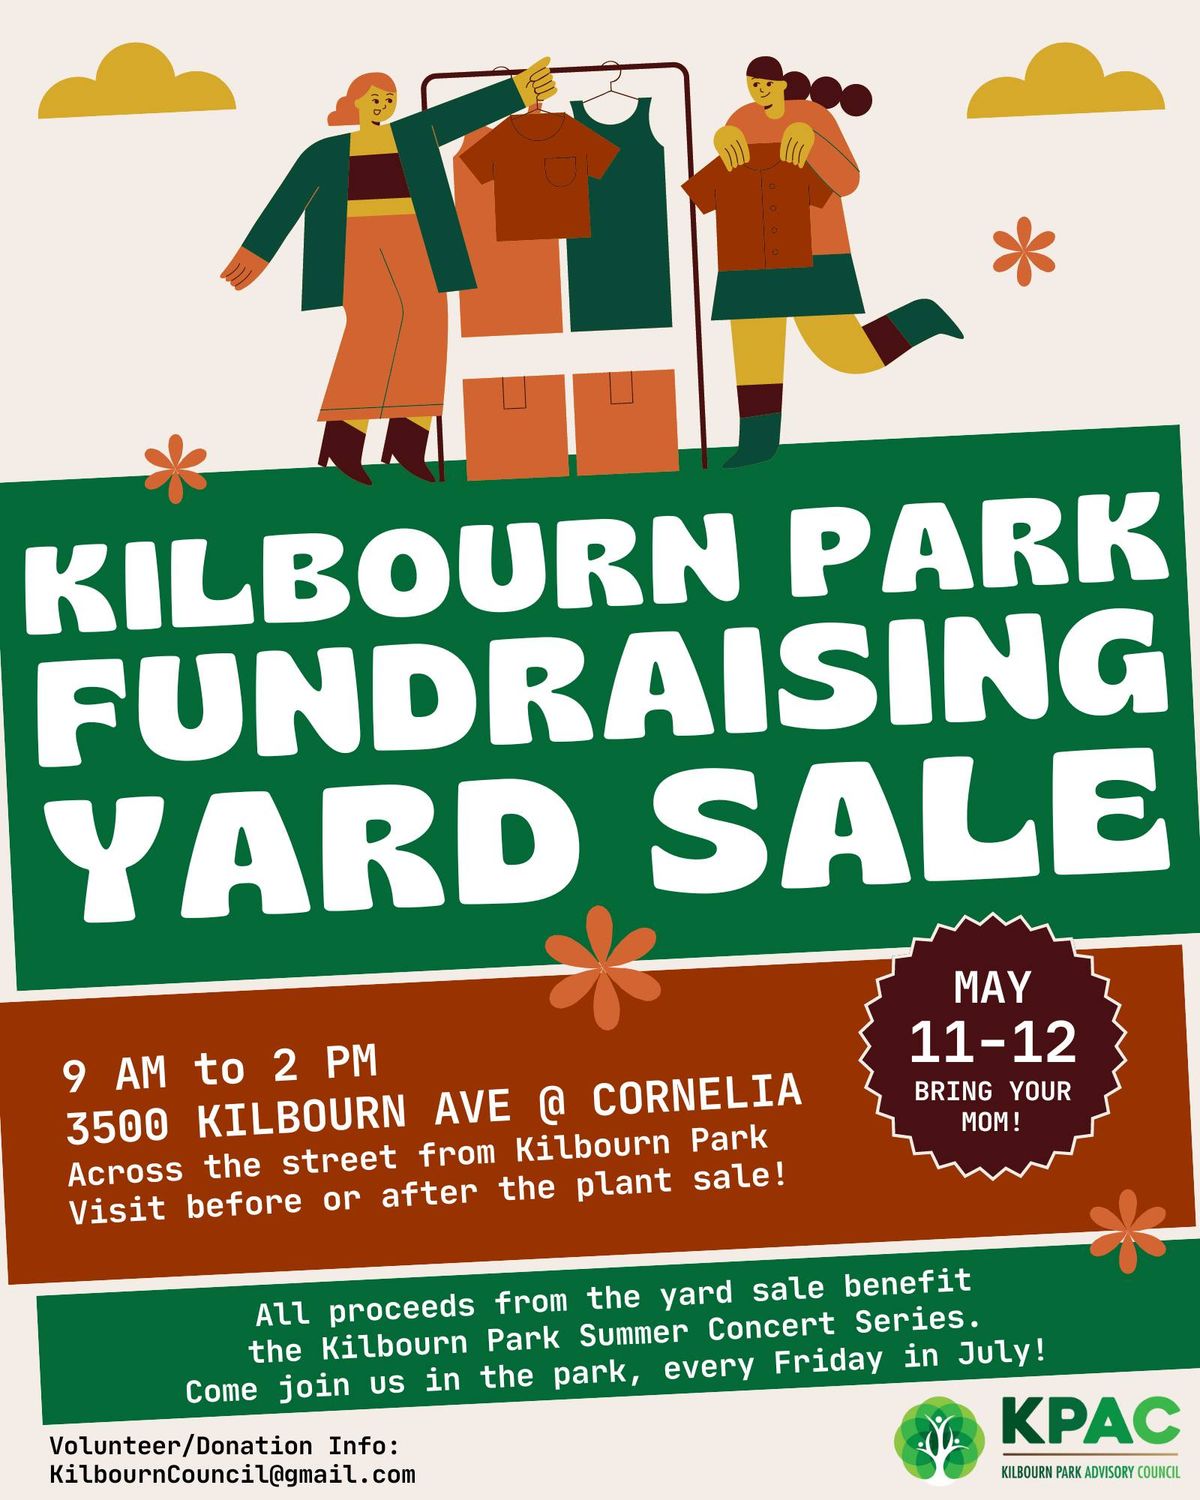 Kilbourn Park Advisory Council (KPAC) Fundraising Yard Sale 